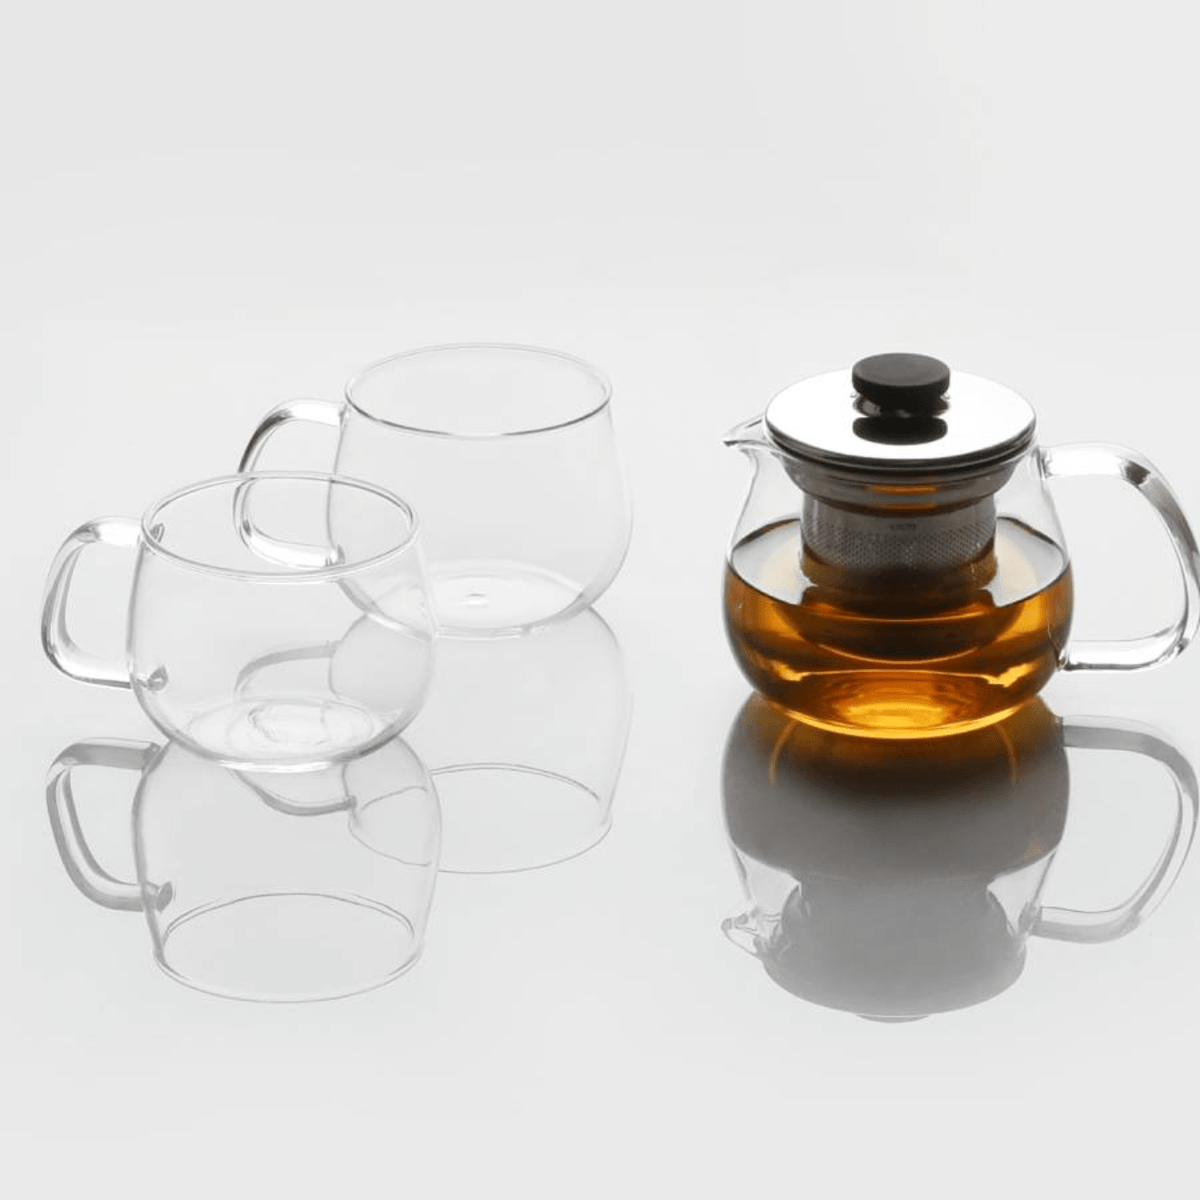 UNITEA teapot 680ml / 24oz stainless steel